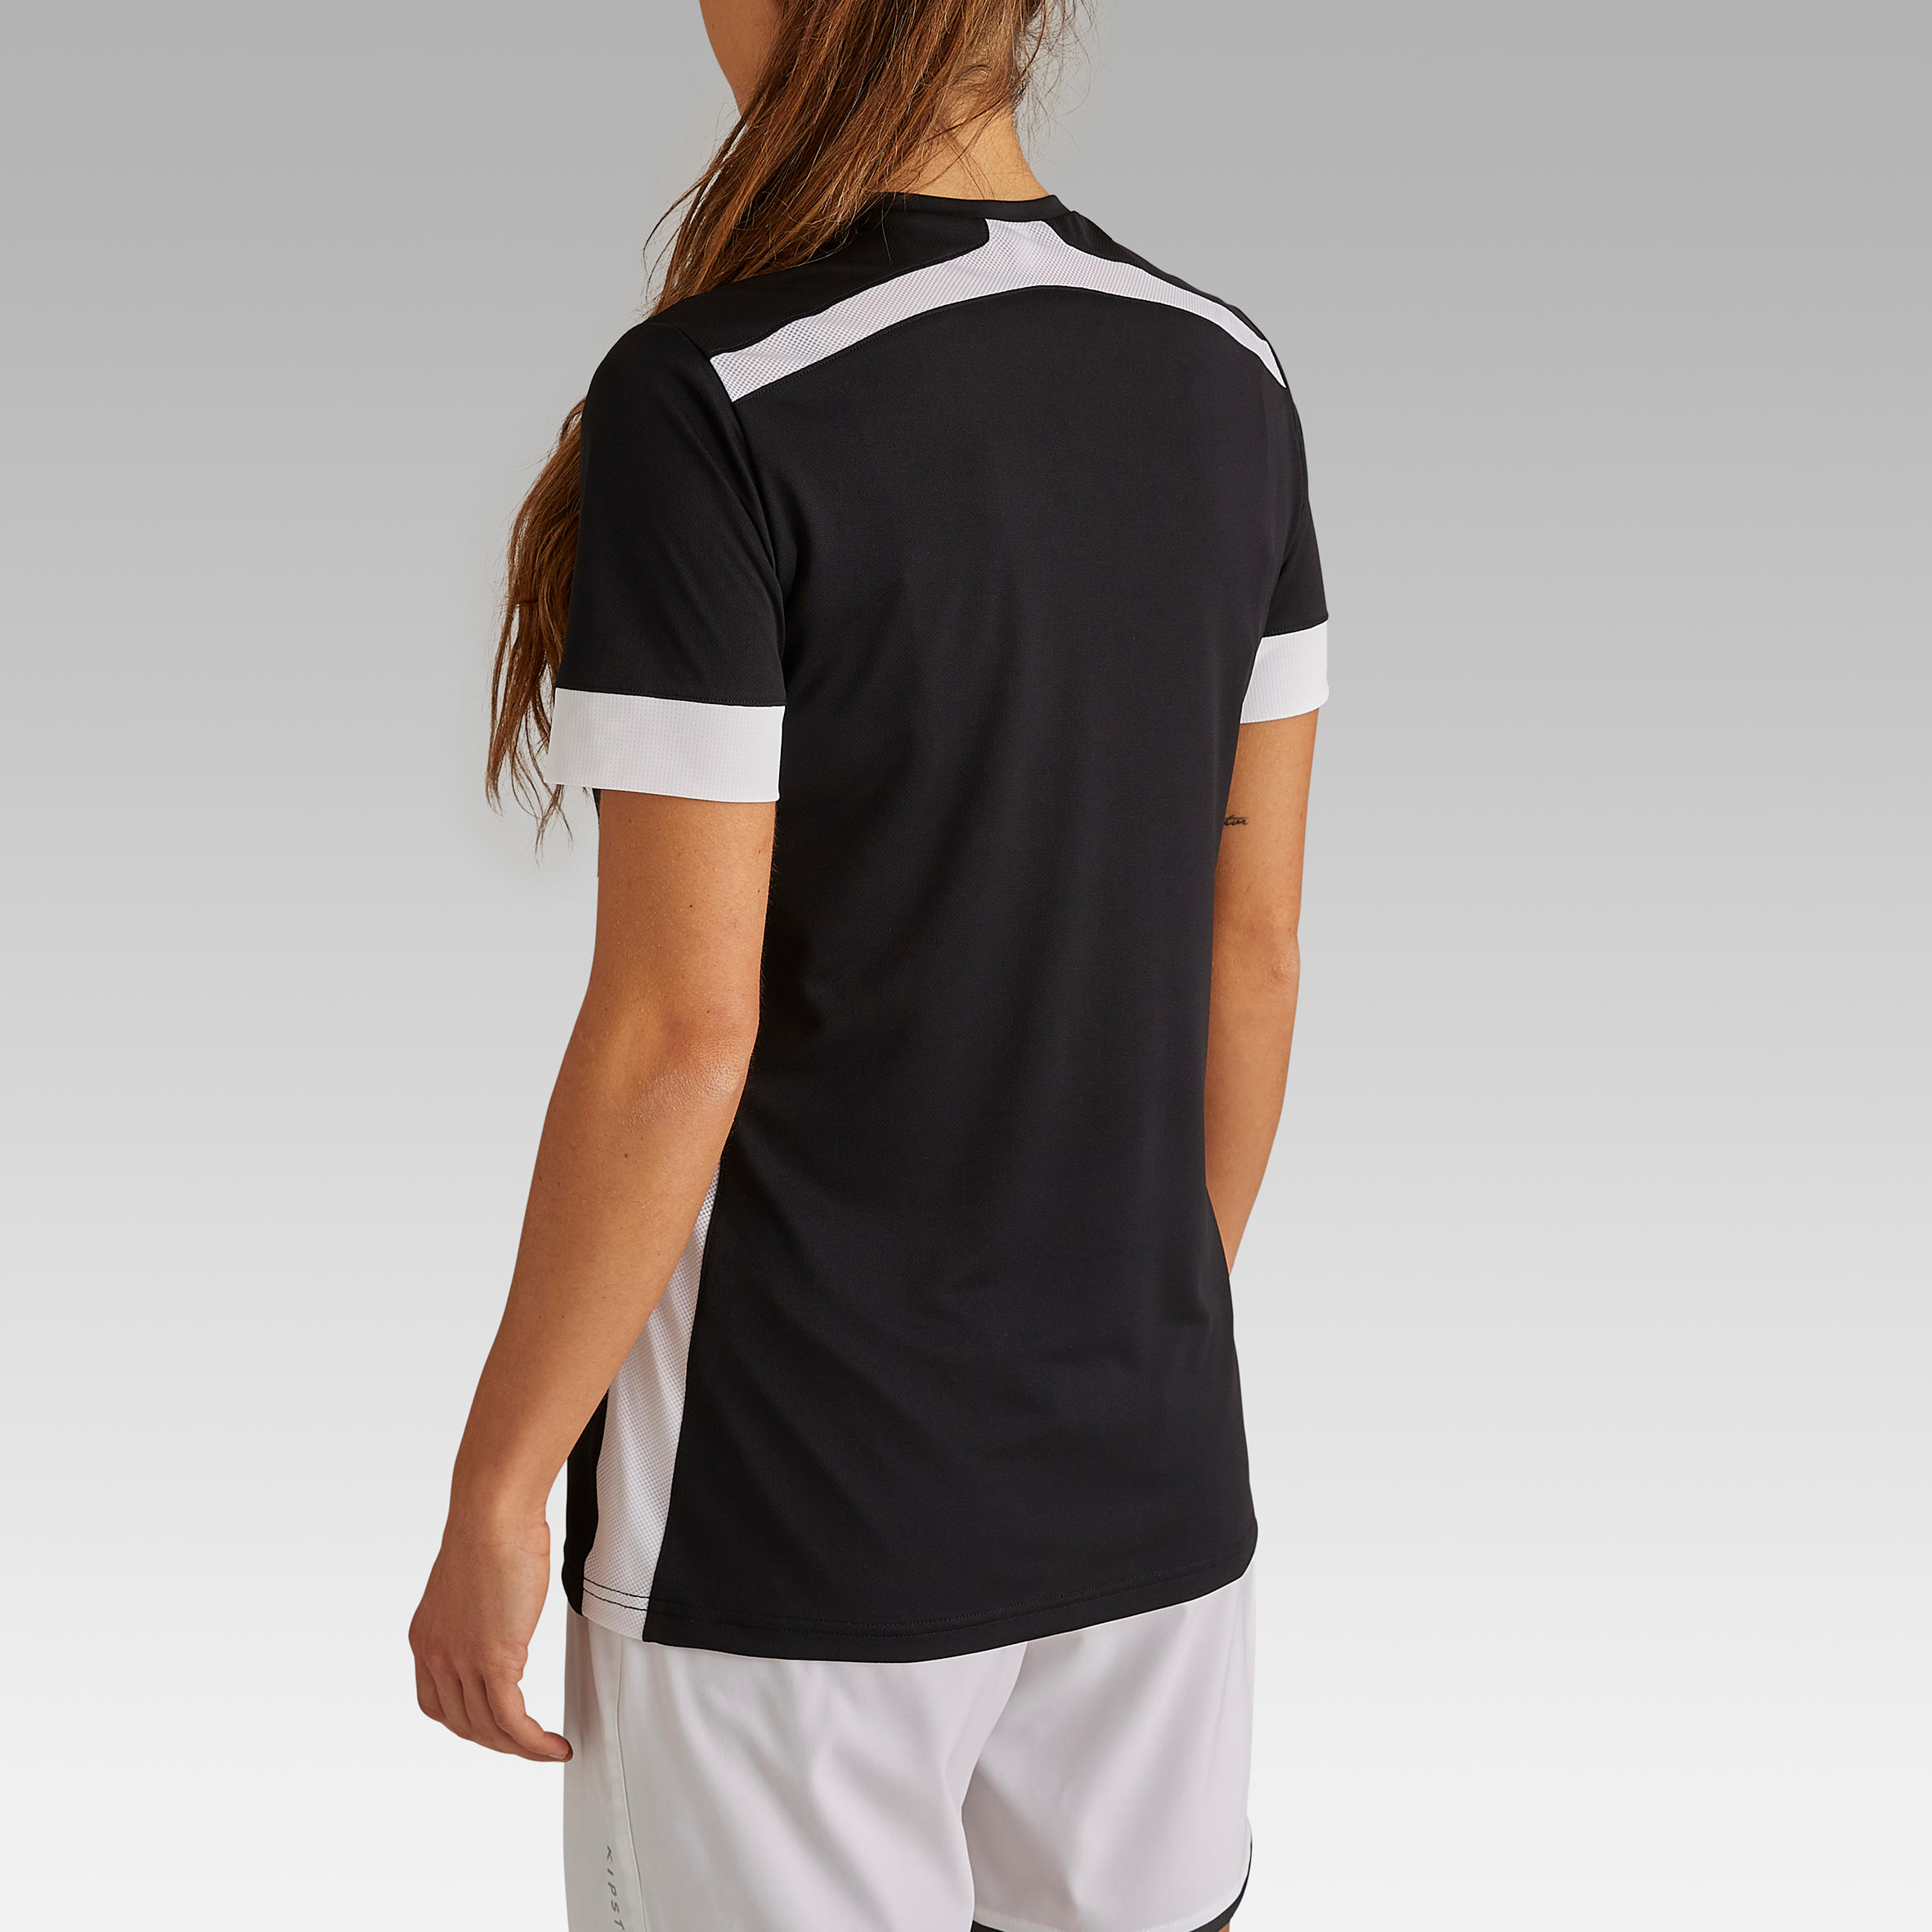 F500 Women's Football Jersey - Black/White 4/9